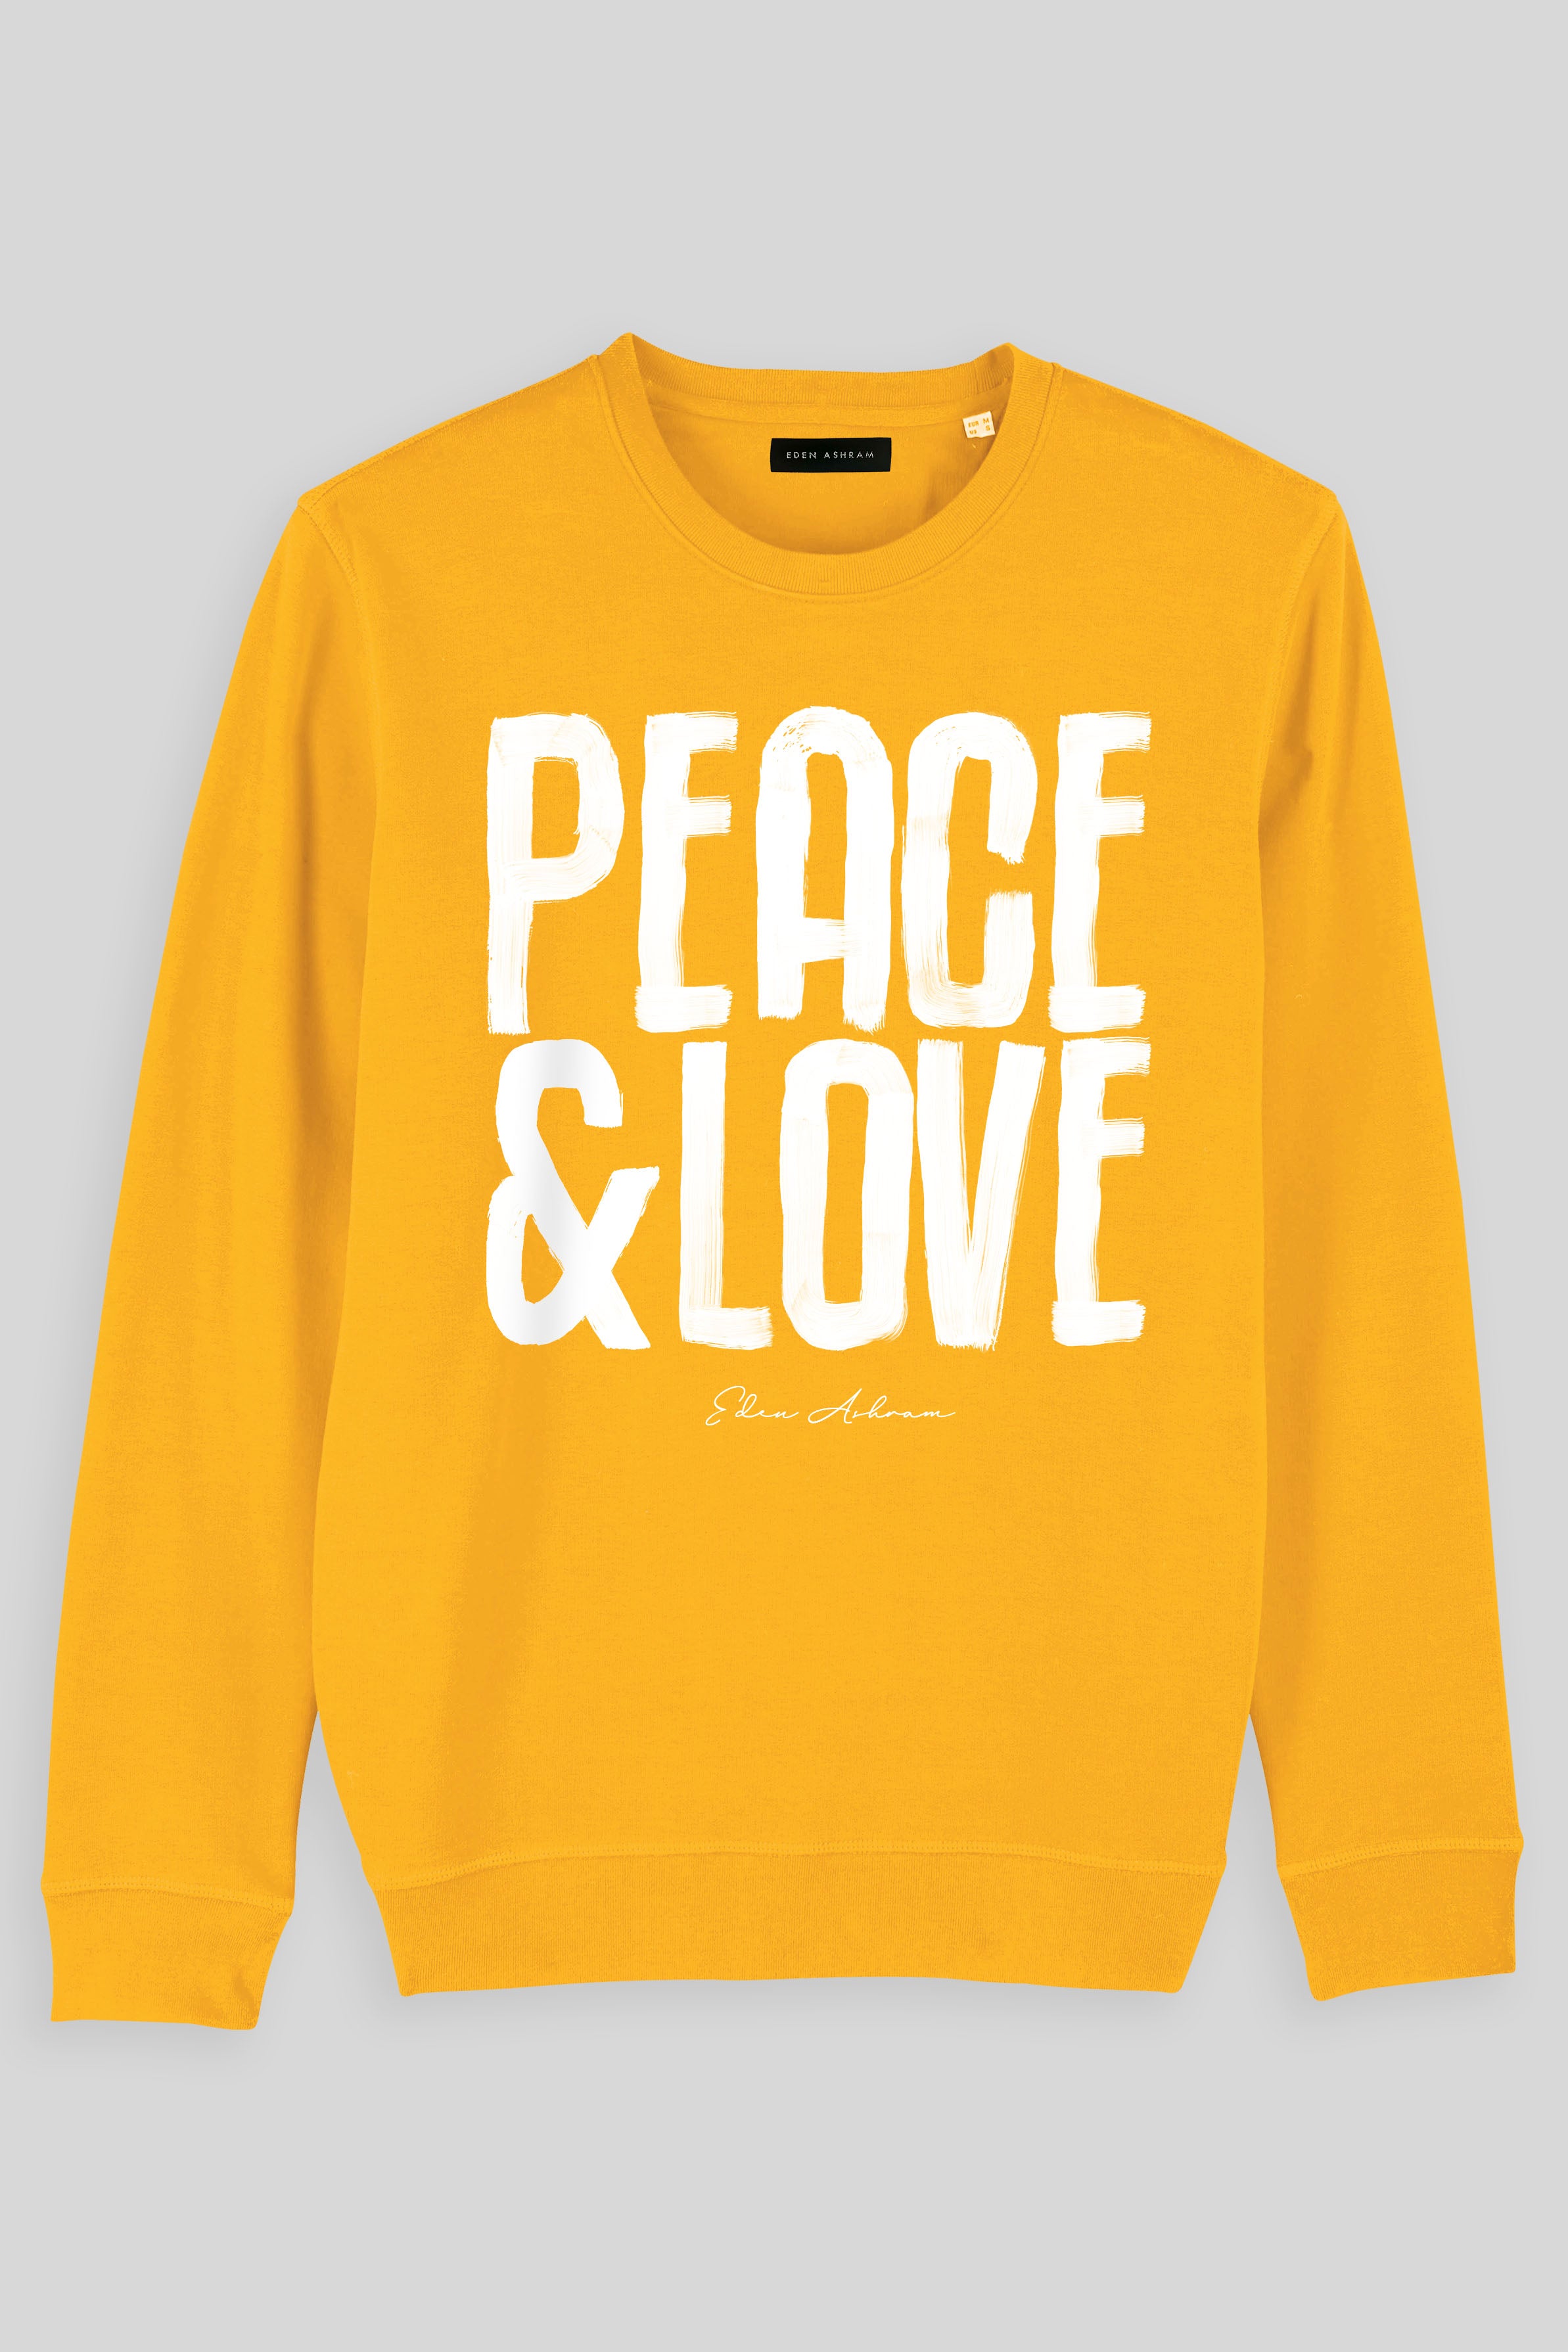 Eden Ashram Peace & Love Premium Crew Neck Sweatshirt Spectra Yellow